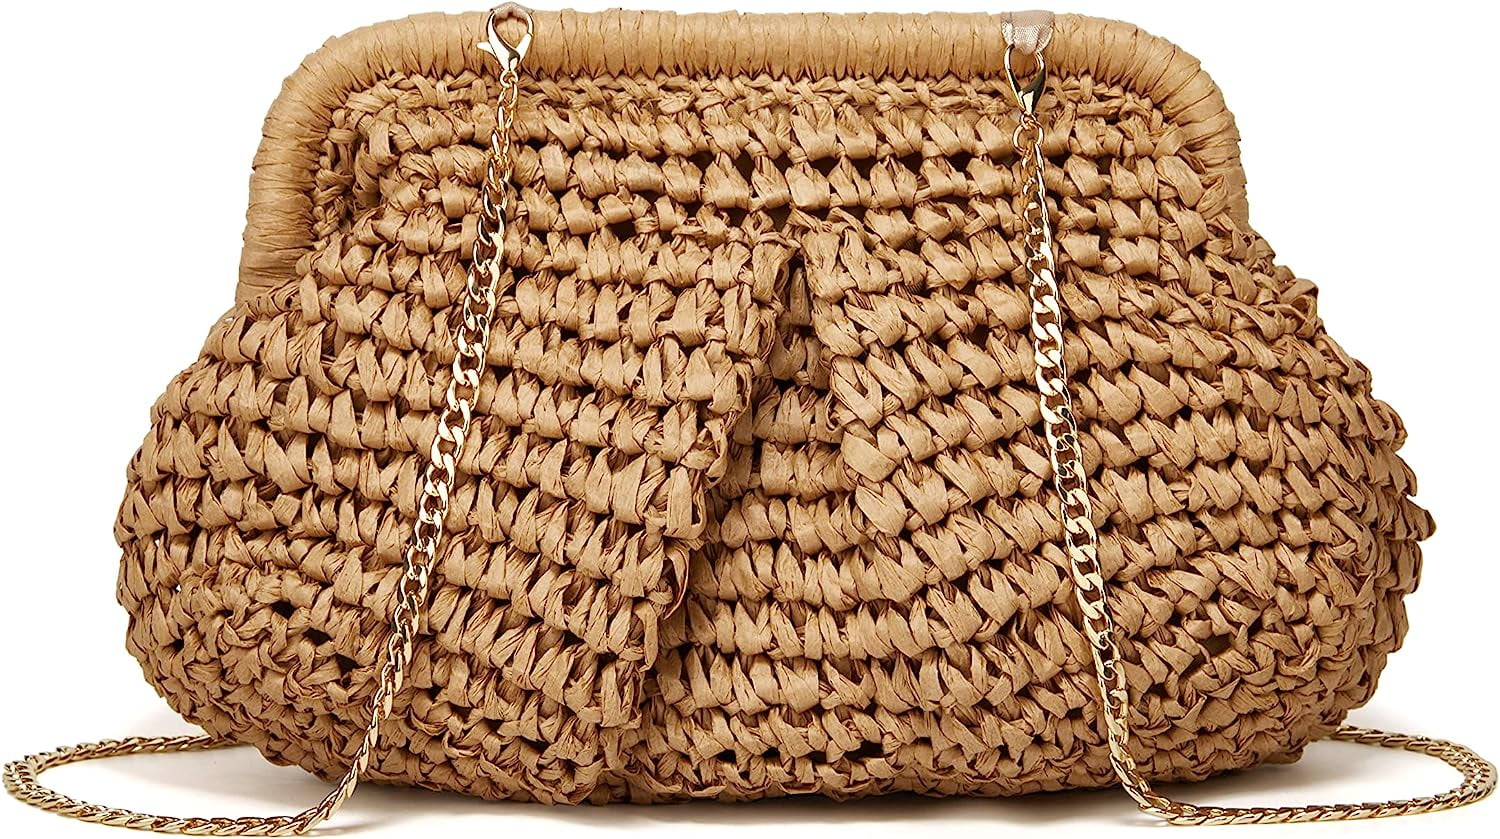 Rattan clutch | Purses and handbags, Wicker purse, Cheap purses